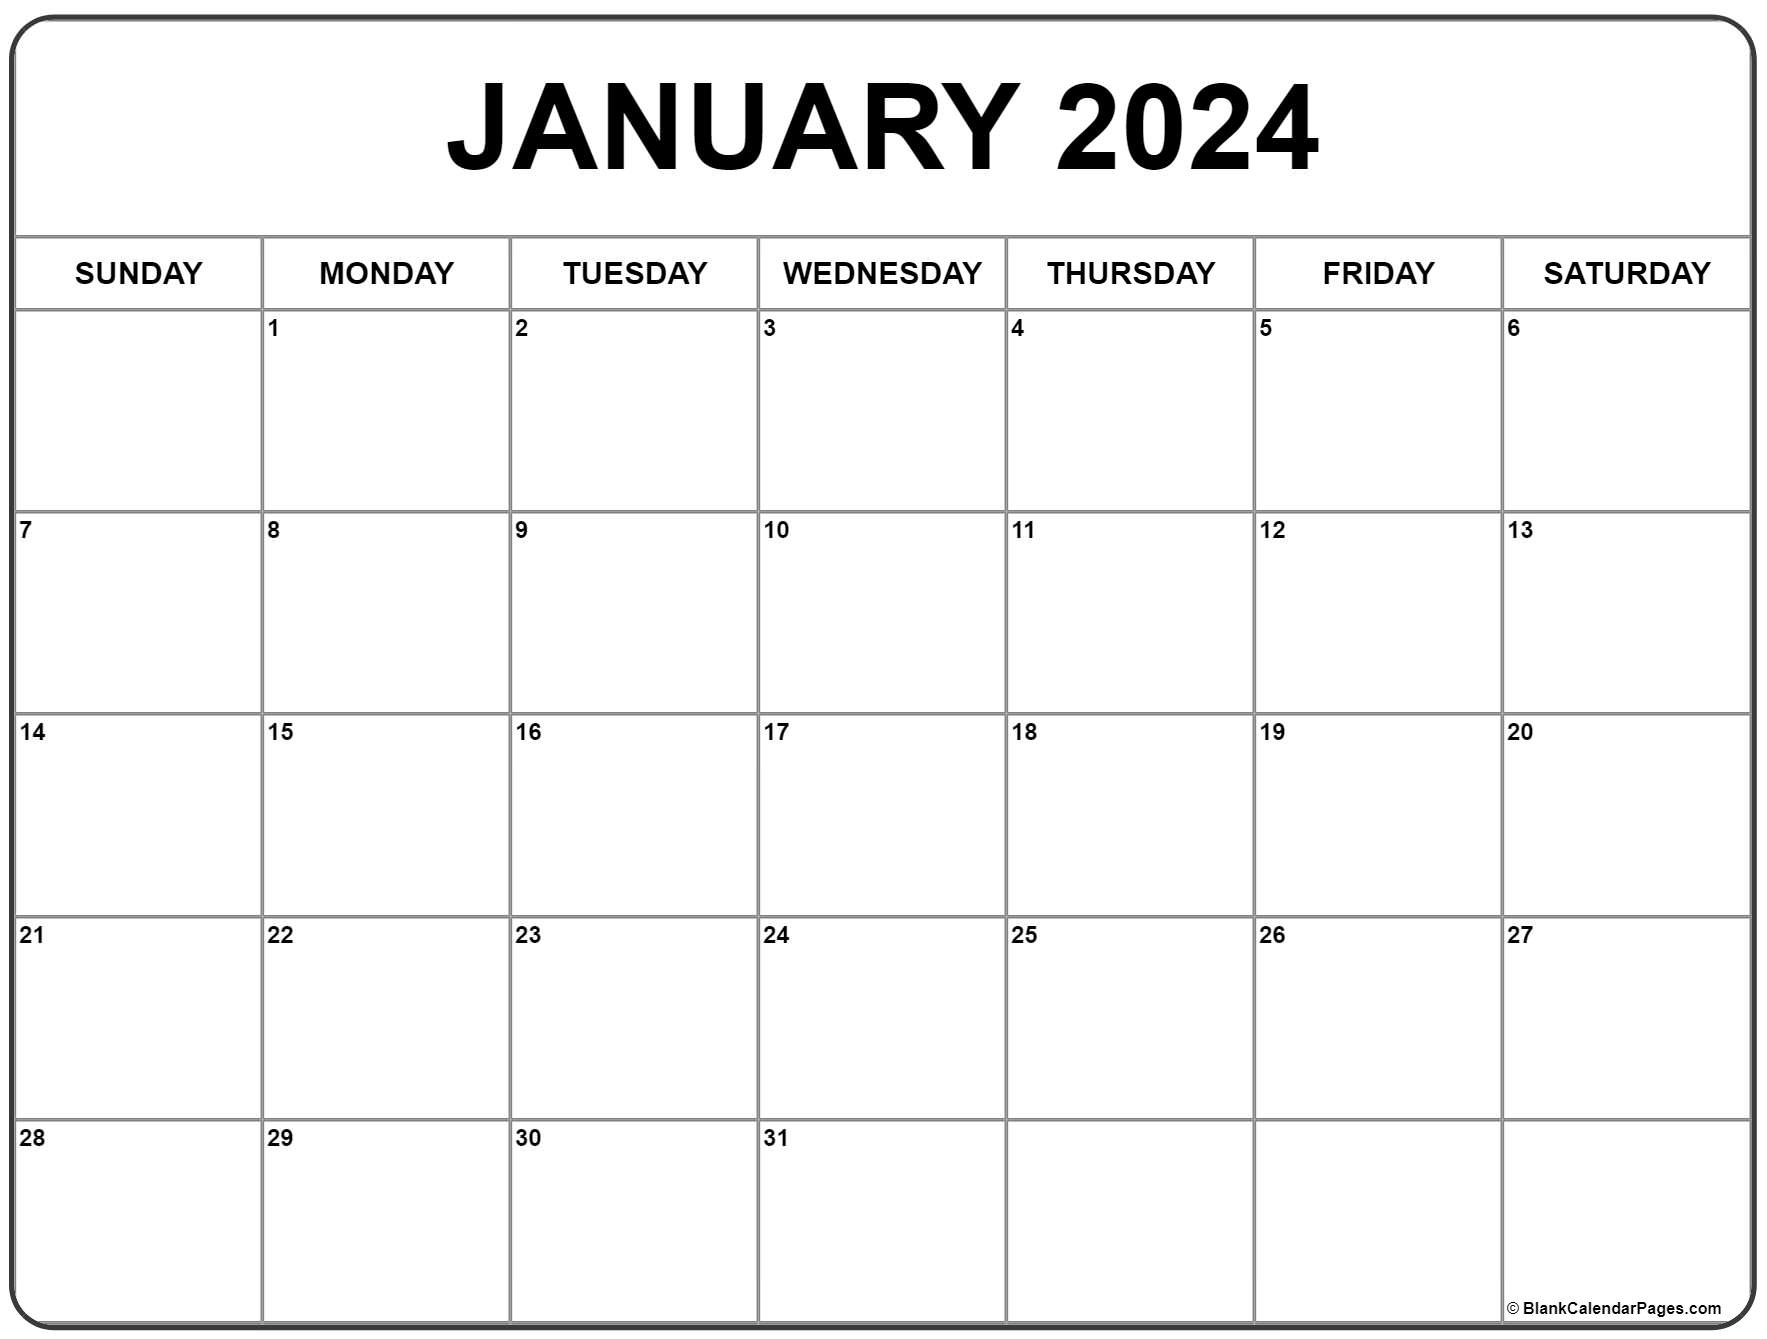 January 2024 Calendar | Free Printable Calendar for Free 2024 Printable Calendar By Month